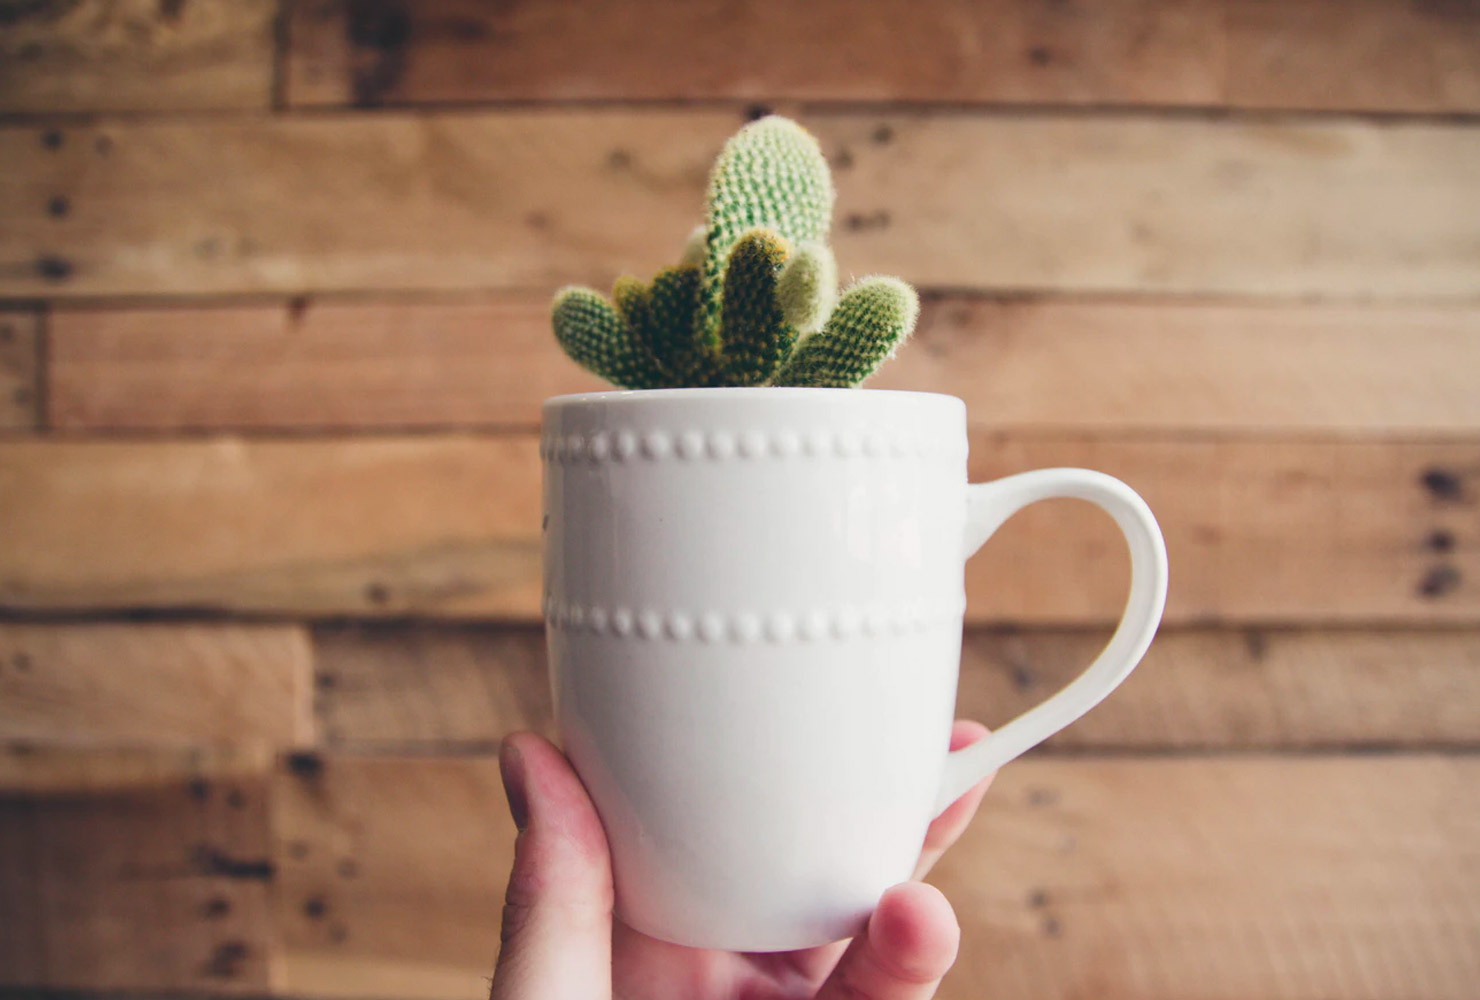 Small cactus mug plant.